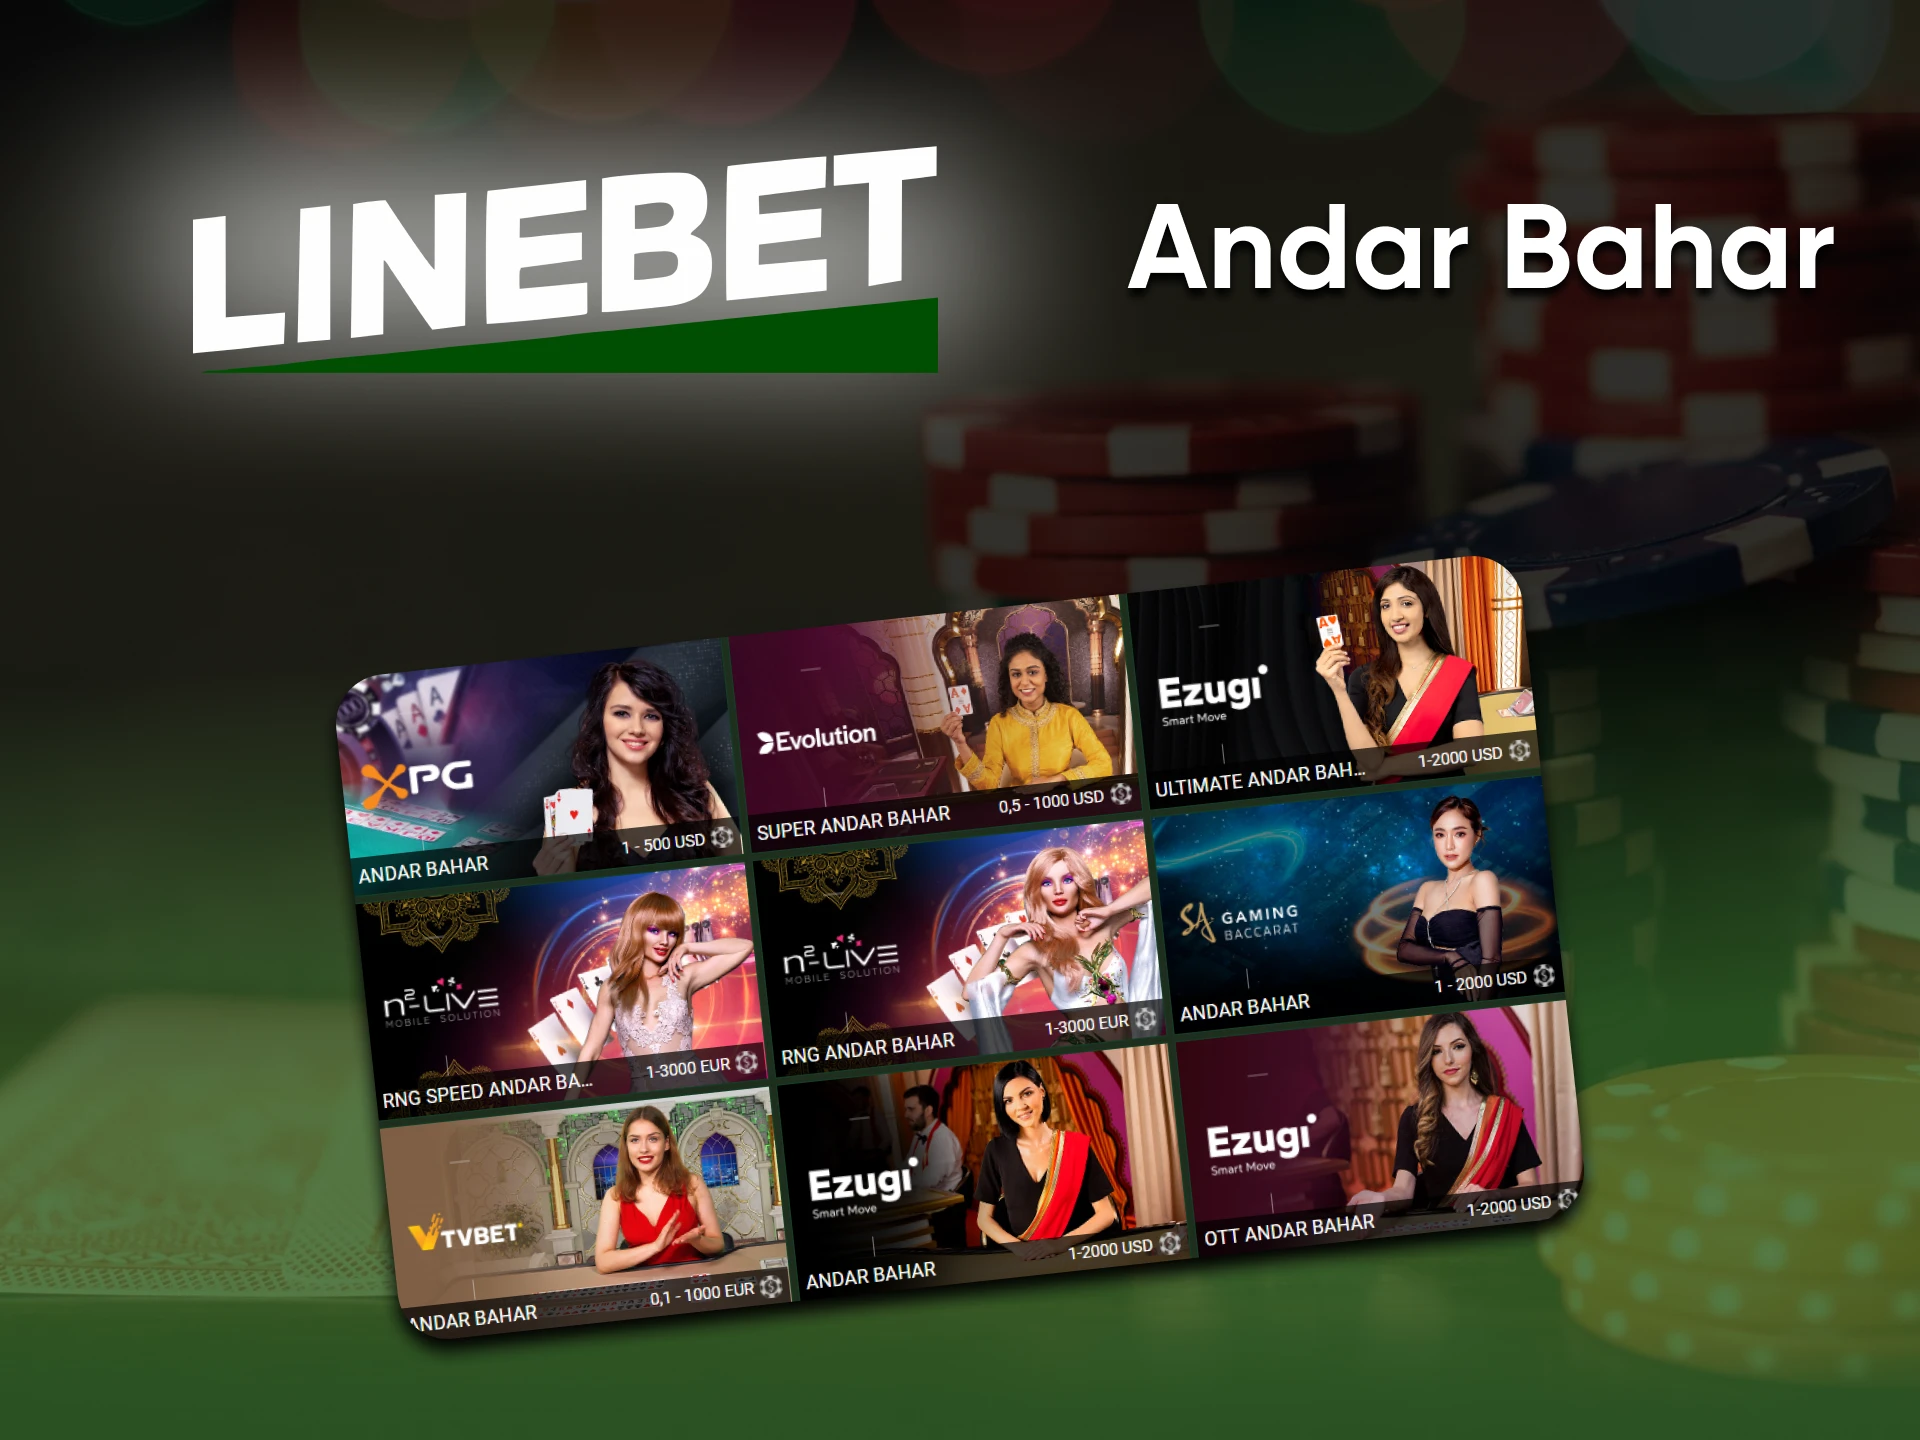 At Linebet casino you can play Andar Bahar.